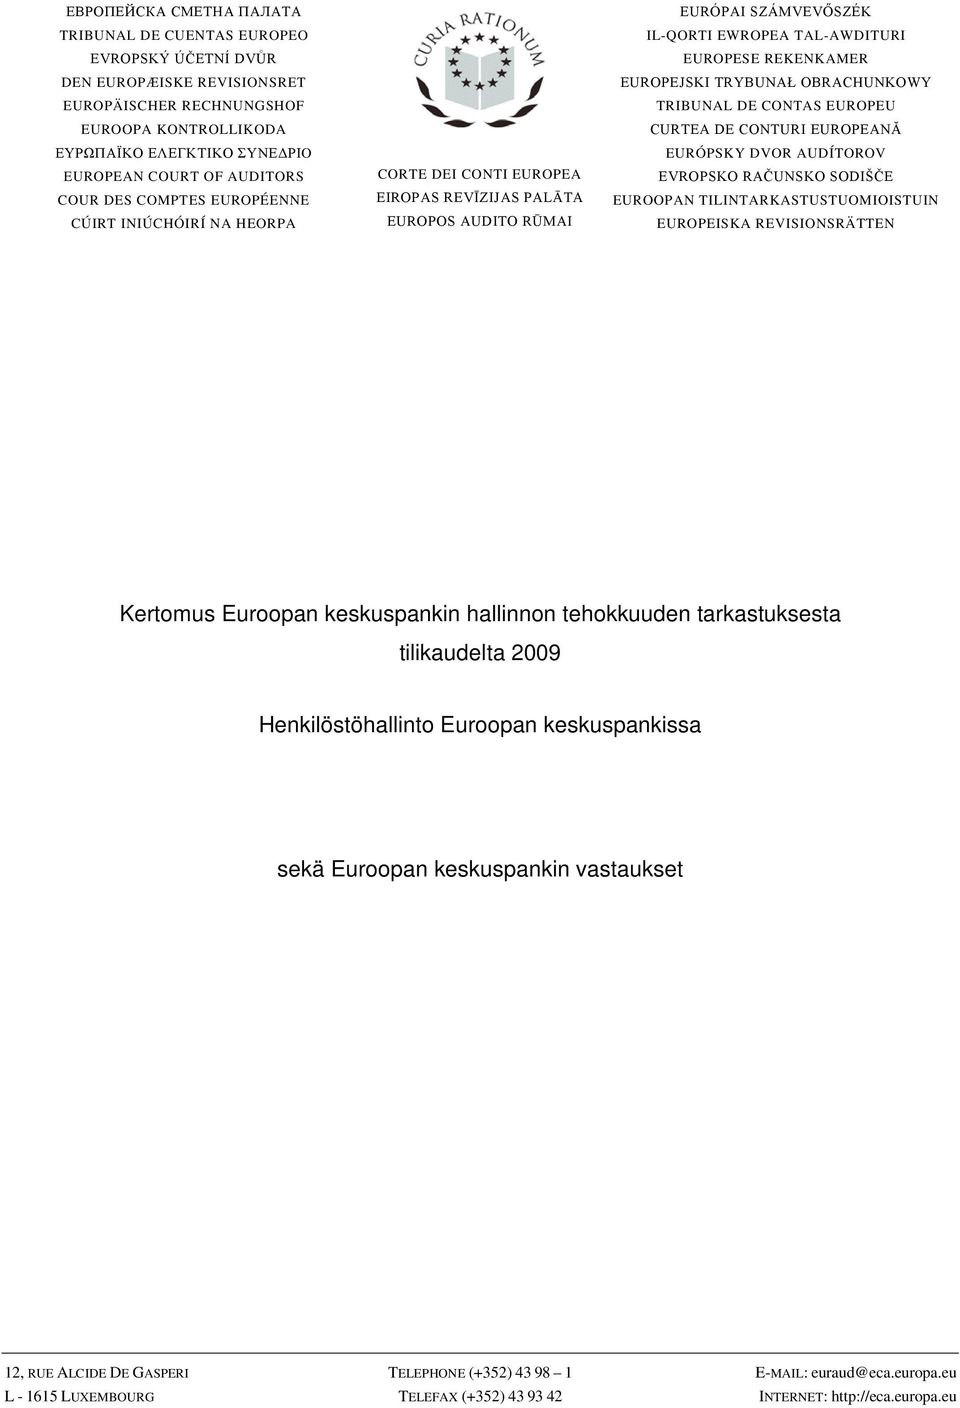 REKENKAMER EUROPEJSKI TRYBUNAŁ OBRACHUNKOWY TRIBUNAL DE CONTAS EUROPEU CURTEA DE CONTURI EUROPEANĂ EURÓPSKY DVOR AUDÍTOROV EVROPSKO RAČUNSKO SODIŠČE EUROOPAN TILINTARKASTUSTUOMIOISTUIN EUROPEISKA